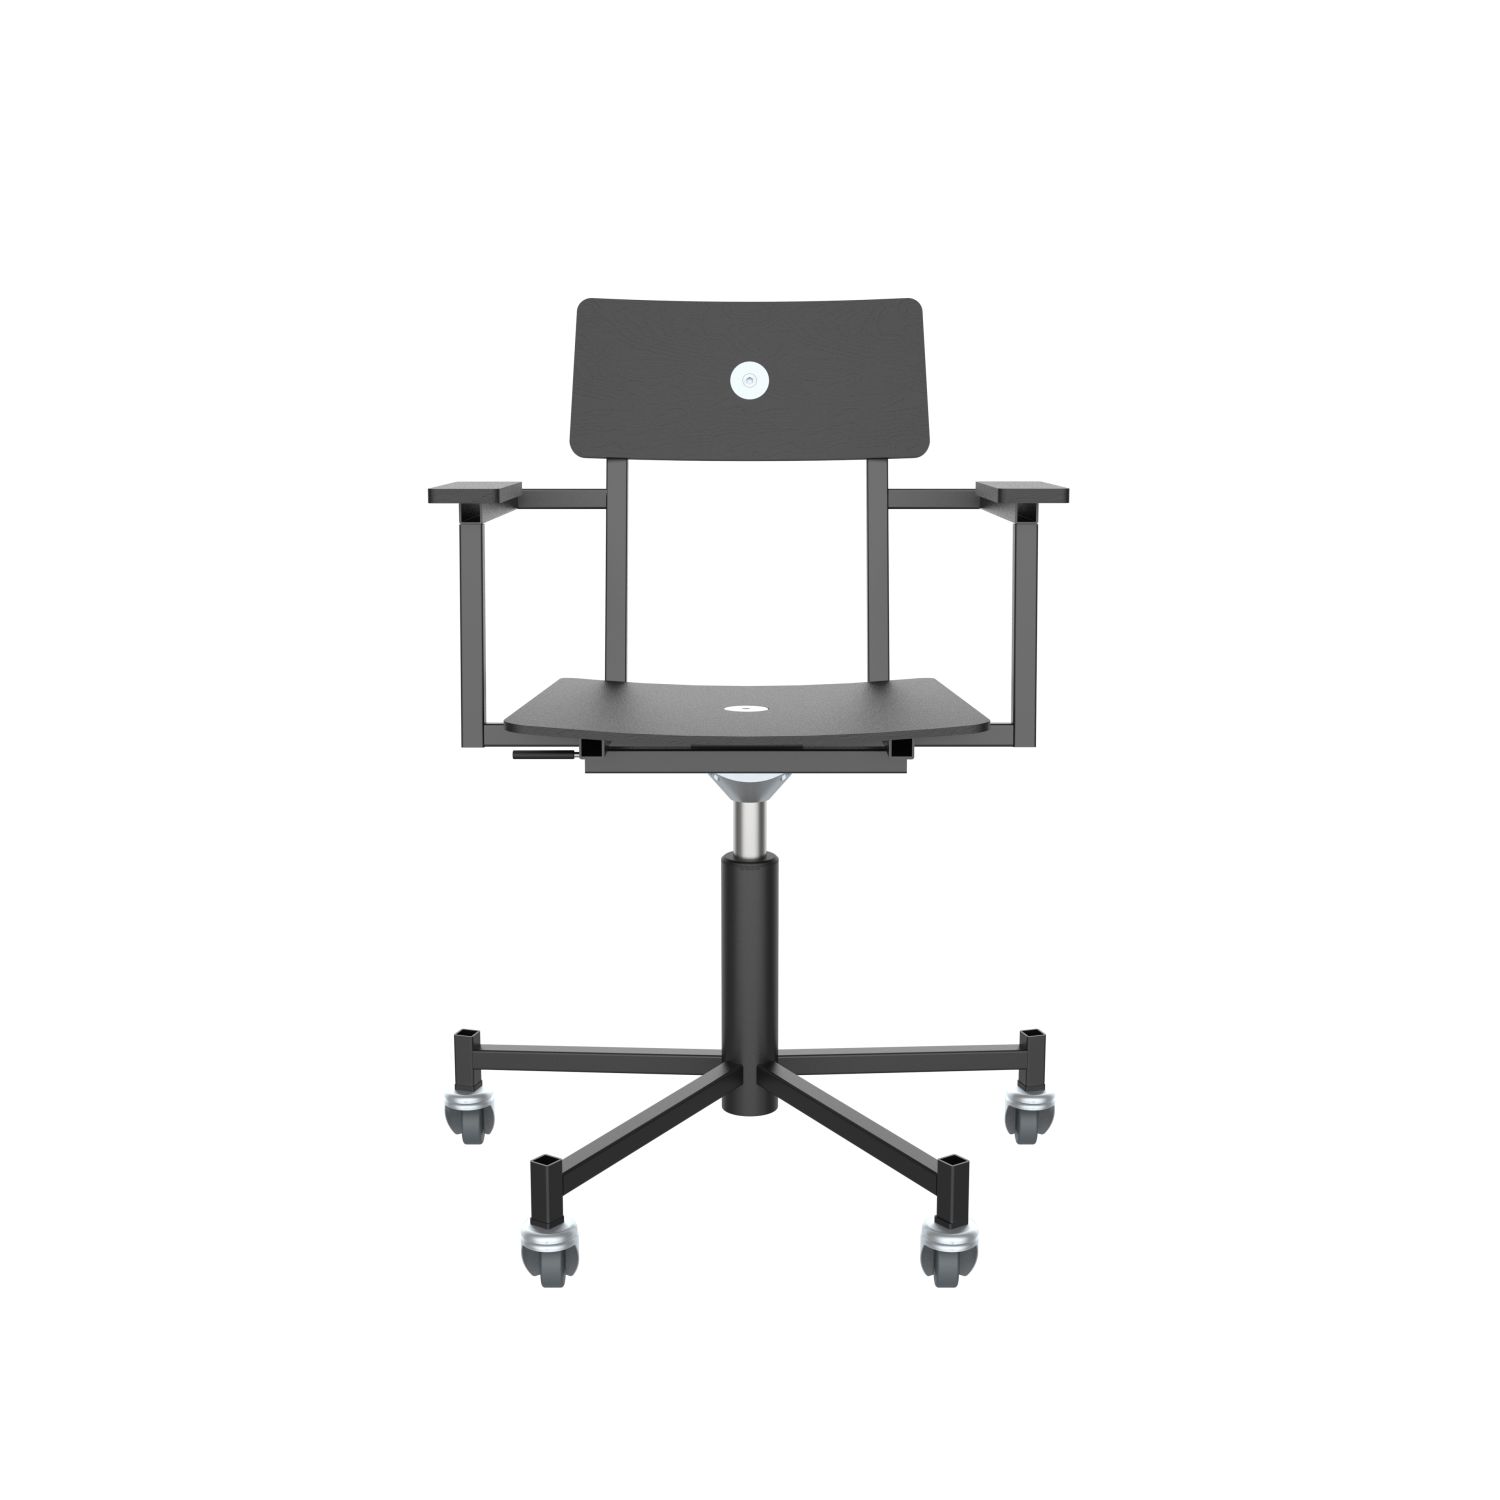 lensvelt piet hein eek mitw wooden office chair with armrests black ral9005 black ral9005 with wheels